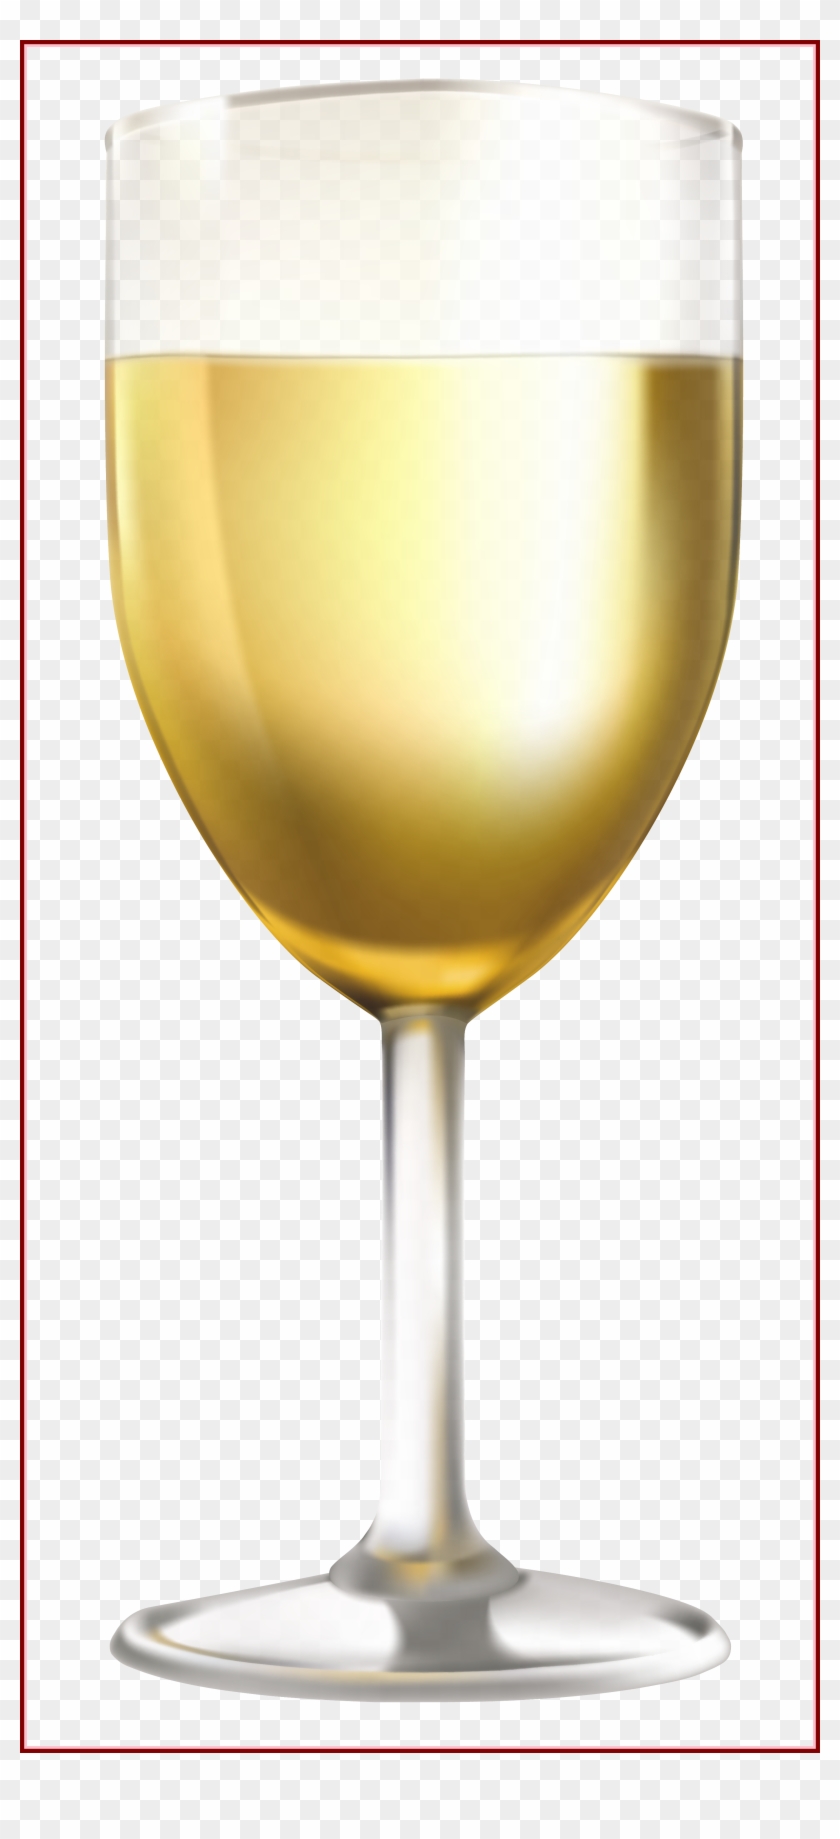 Amazing White Wine Glass Clip Art Image Pics Words - Wine Glass Clipart #777682